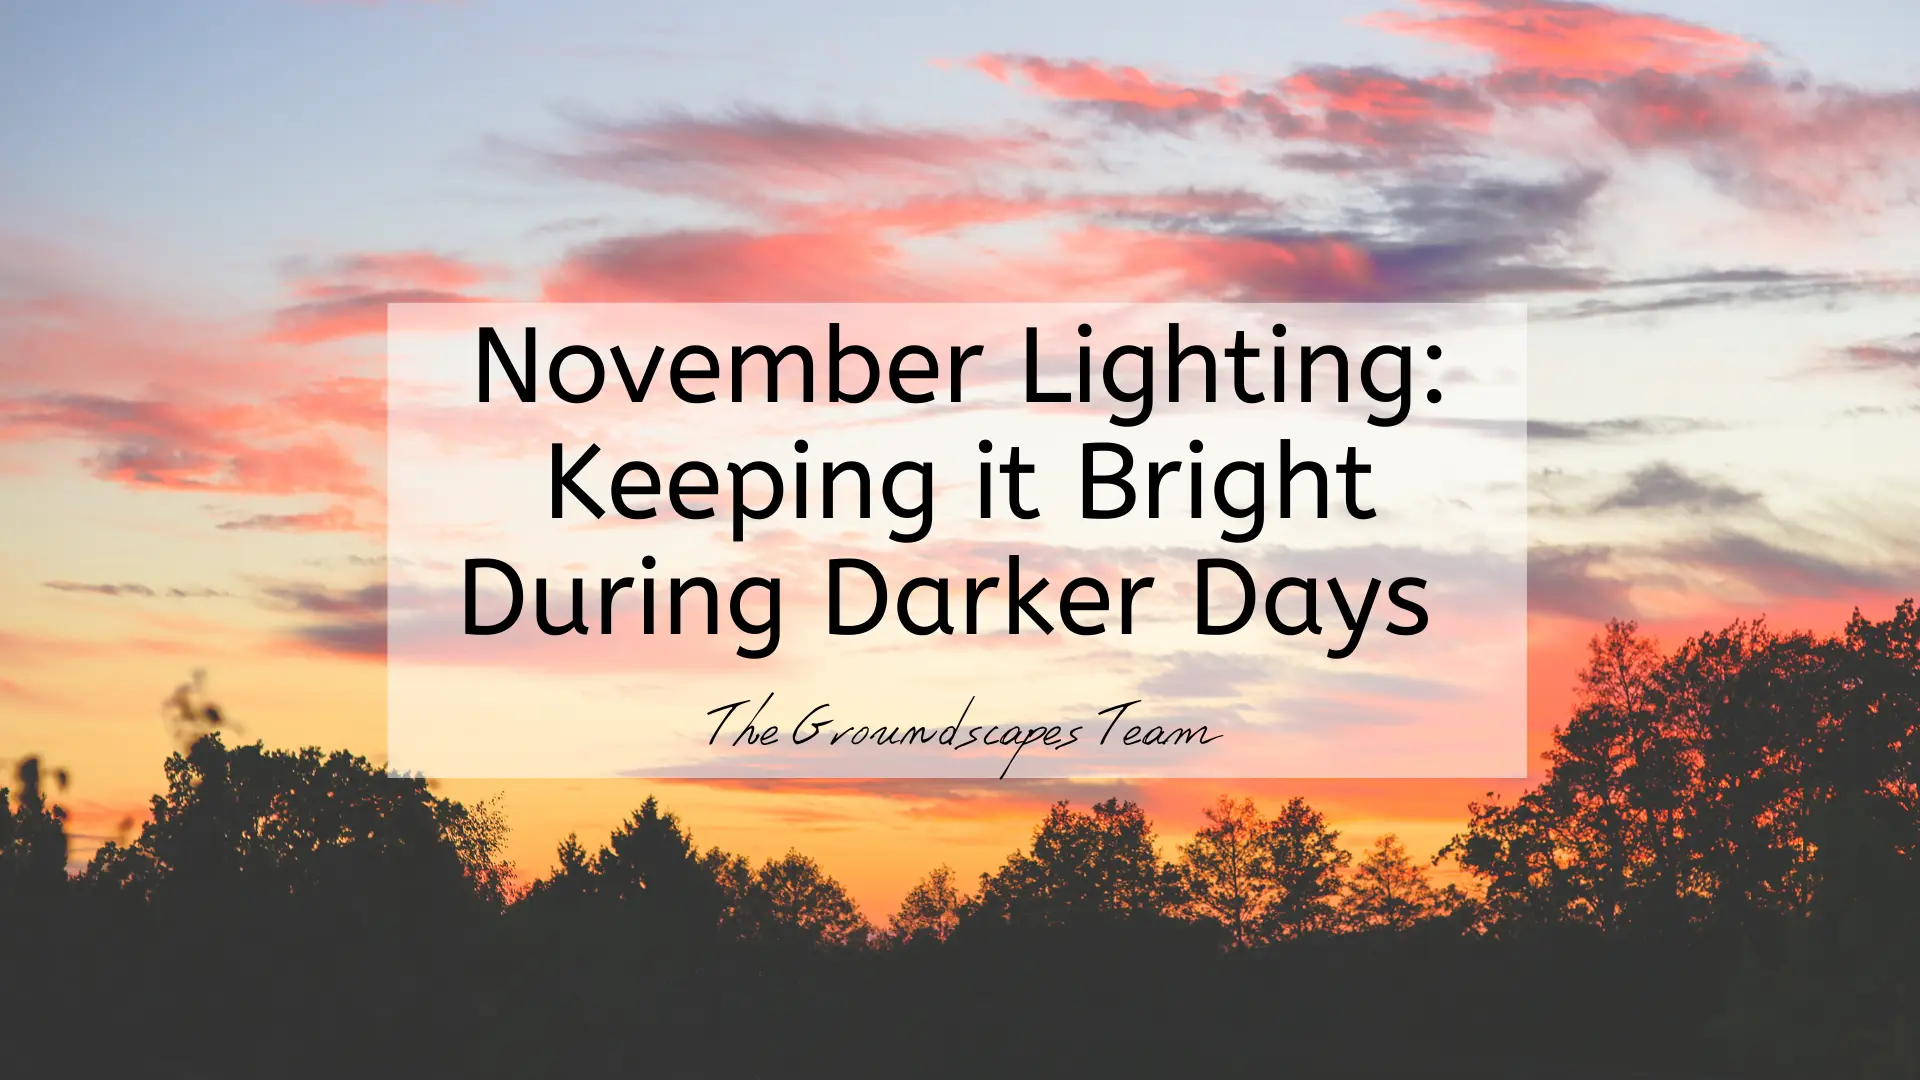 November Lighting: Keeping it Bright During Darker Days